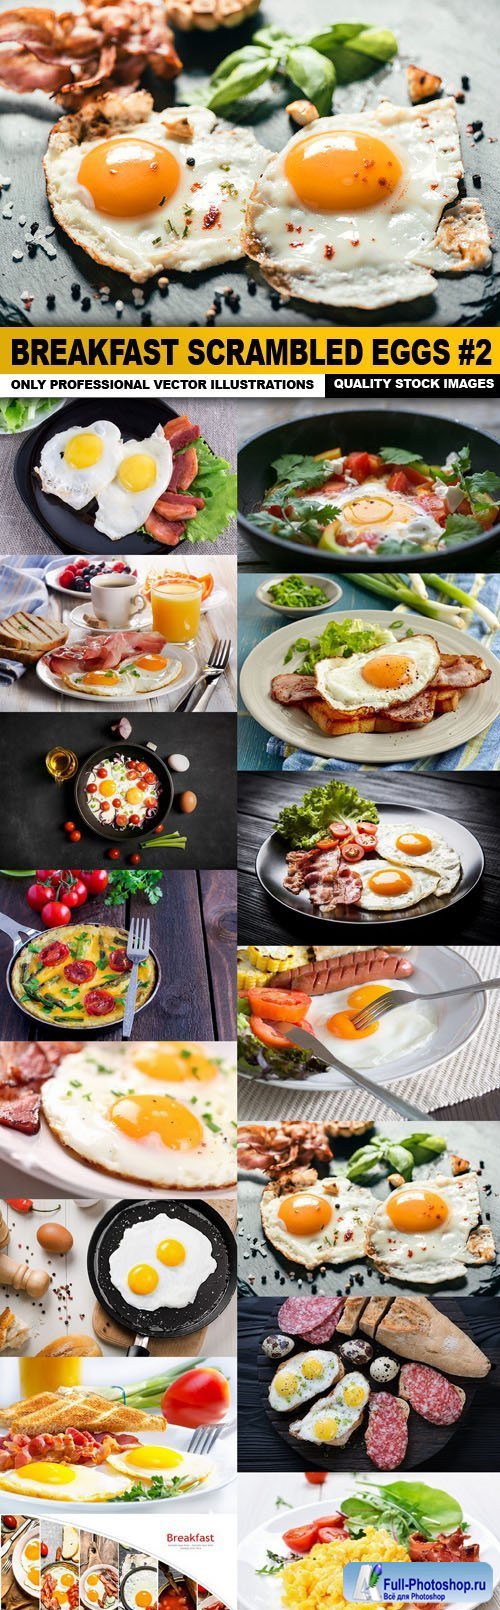 Breakfast Scrambled Eggs #2 - 15 HQ Images